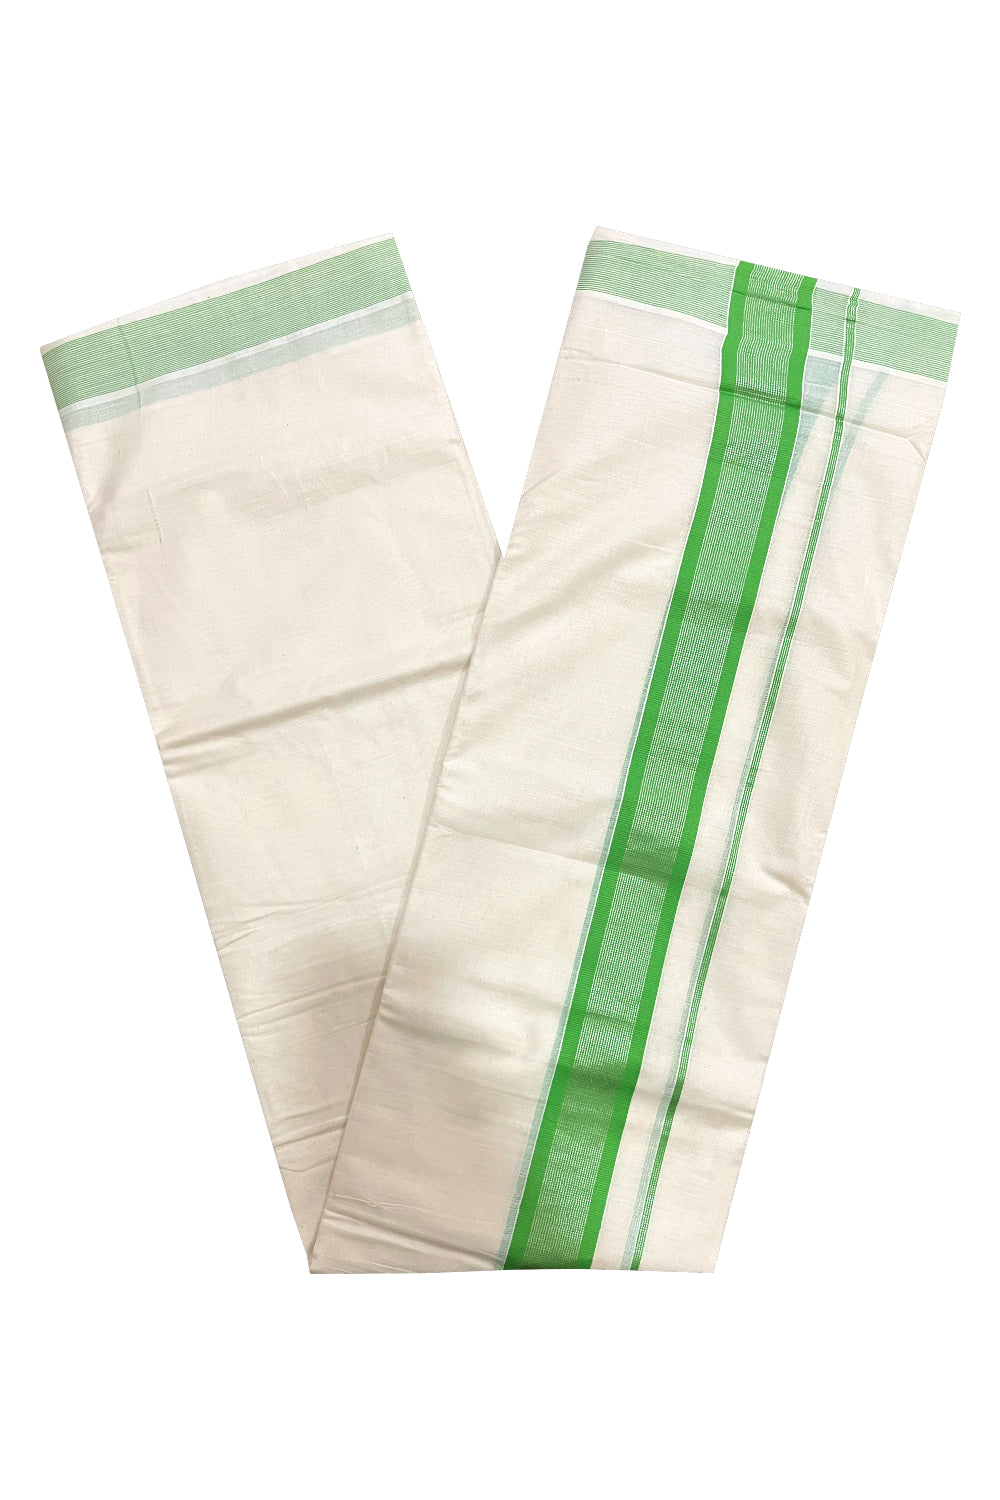 Pure Cotton Double Mundu with Light Green and Silver Kasavu Kara (South Indian Kerala Dhoti)